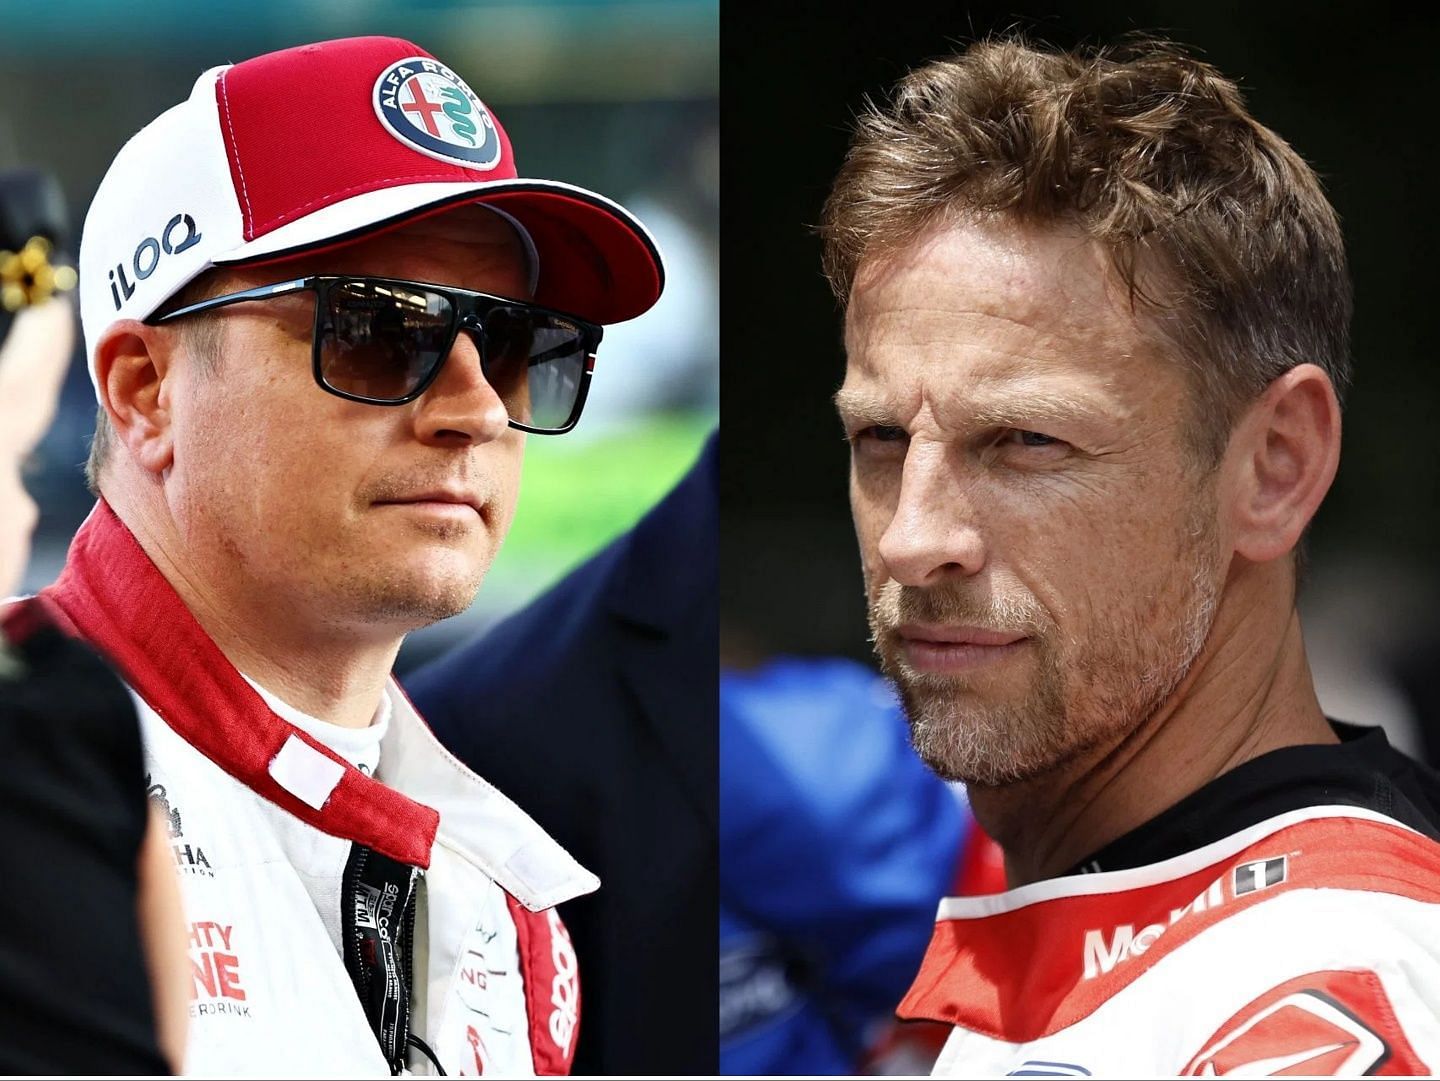 Kimi Raikkonen and Jenson Button (Images via Getty)